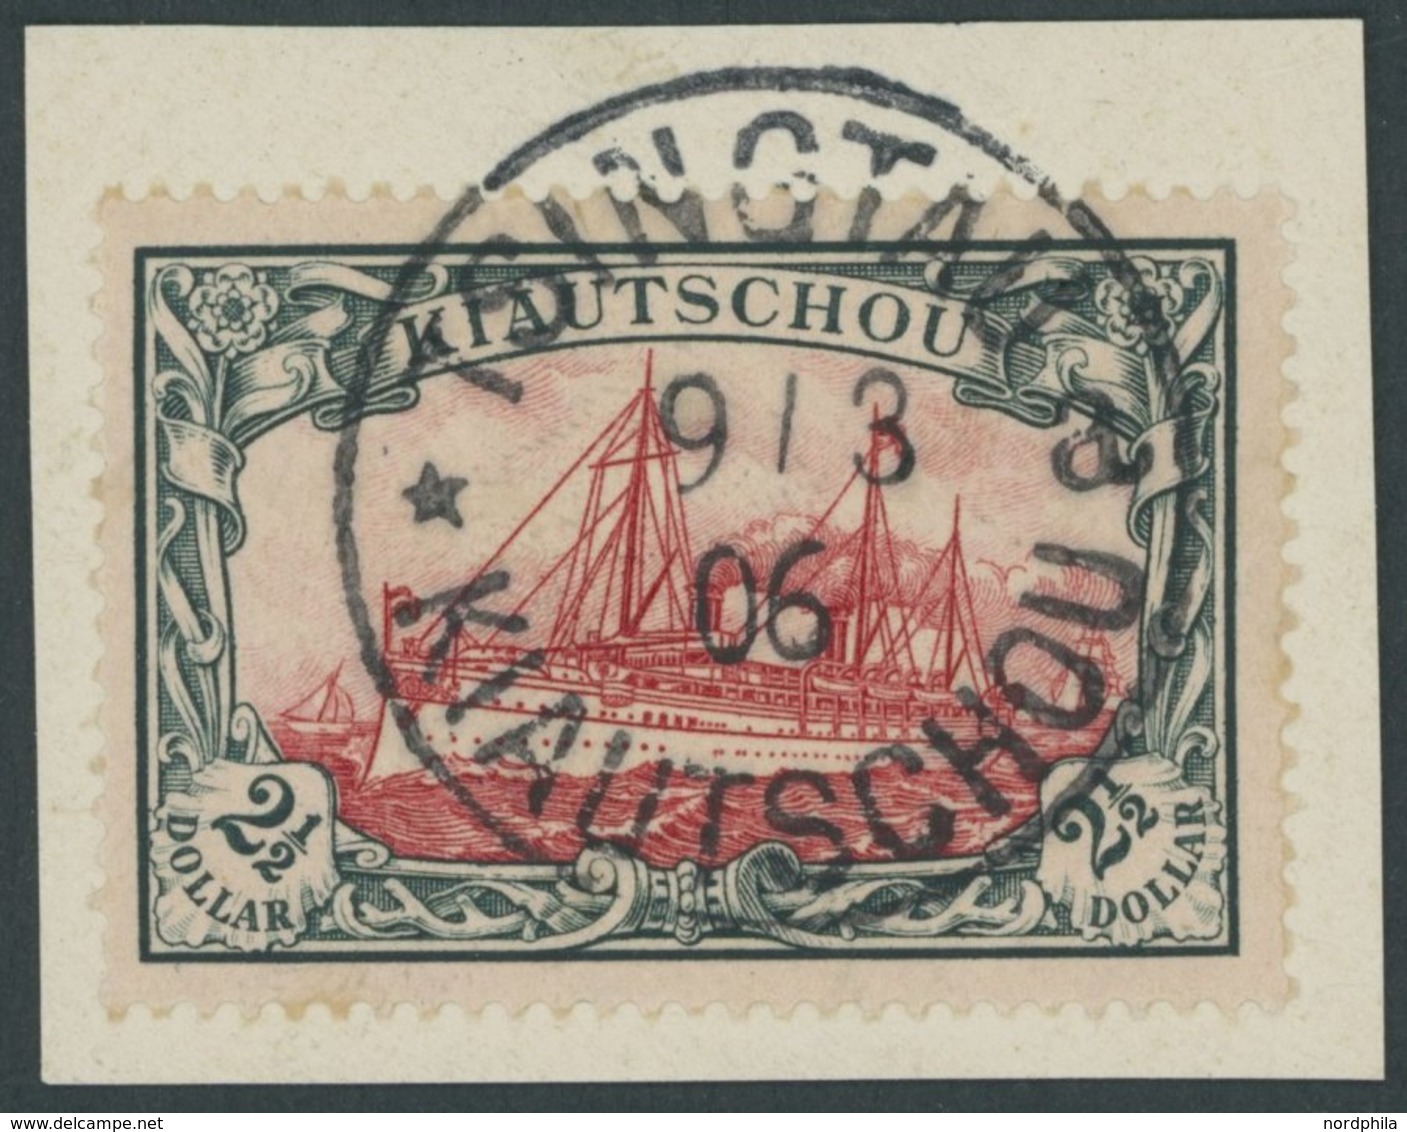 KIAUTSCHOU 37IA BrfStk, 1905, 21/2 $ Grünschwarz/dunkelkarmin, Mit Wz., Friedensdruck, Prachtbriefstück, Fotoattest Steu - Kiauchau